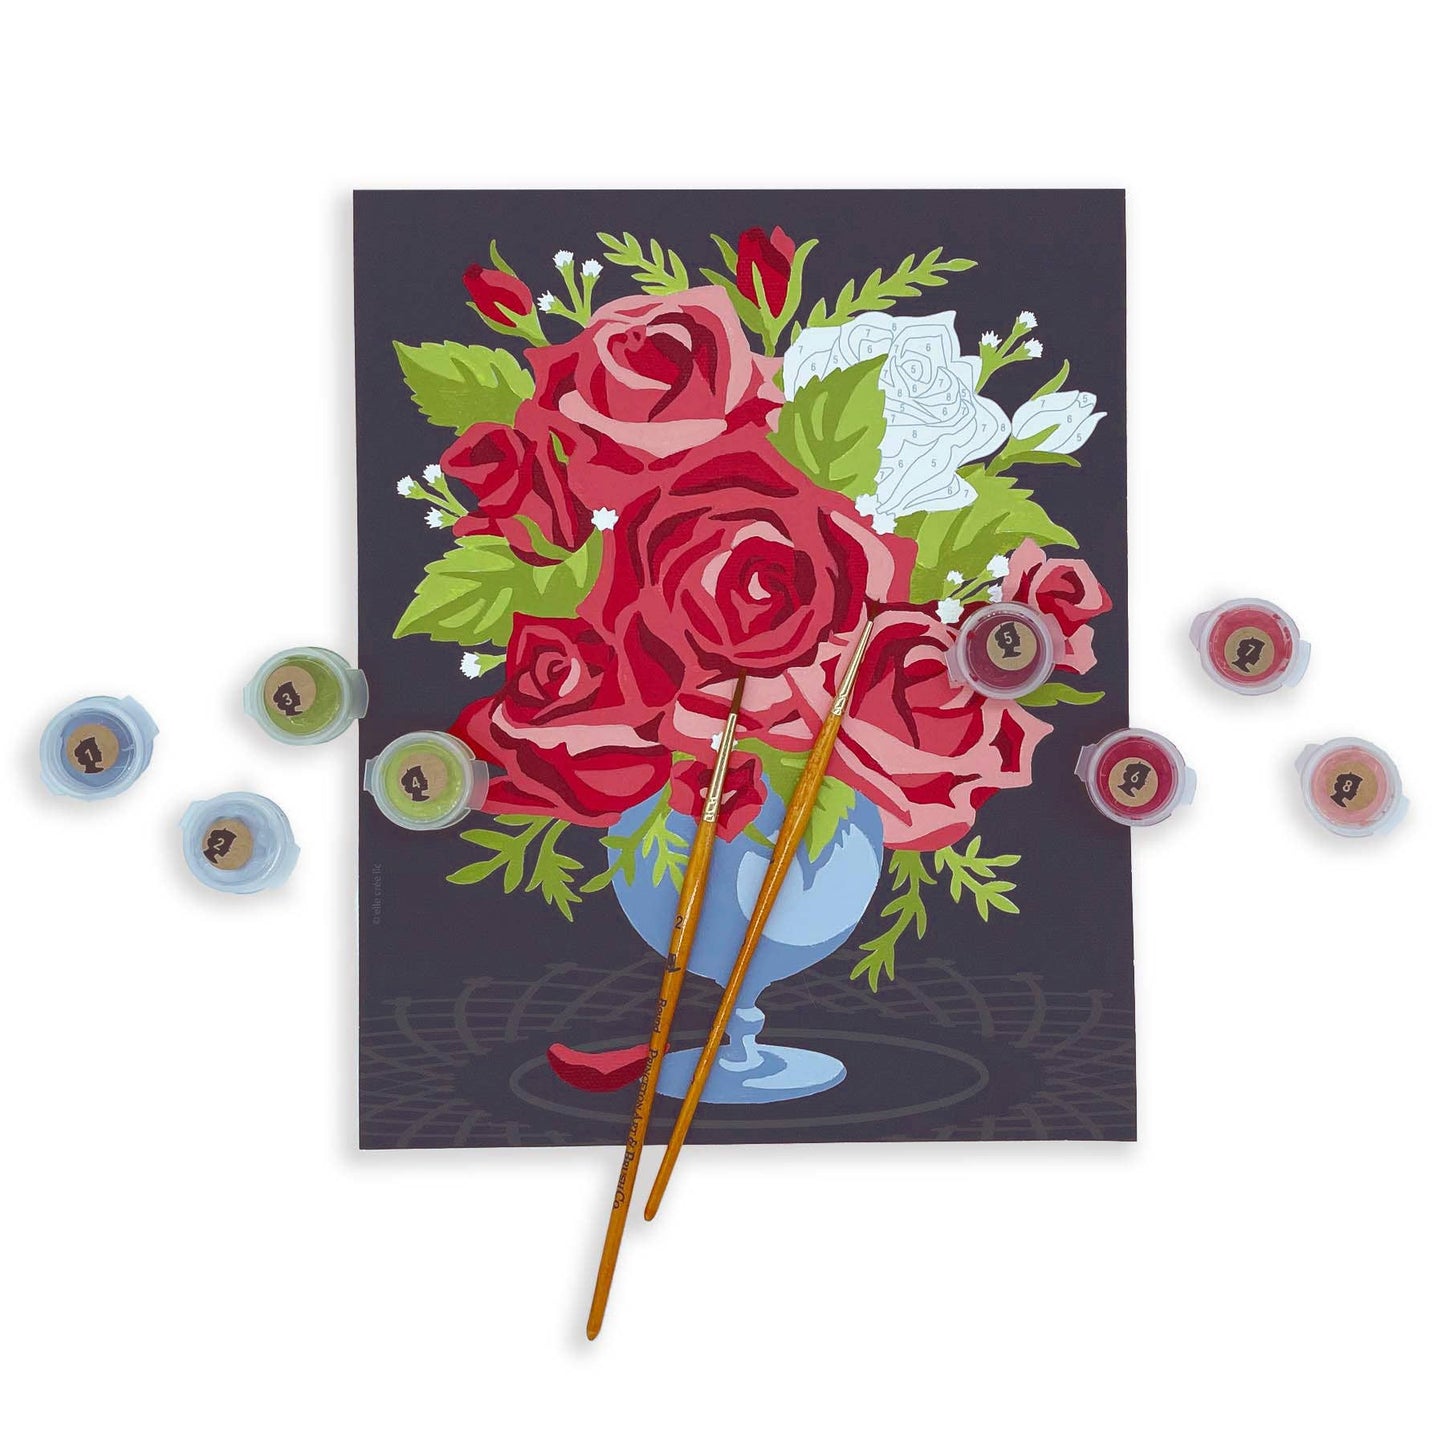 Elle Crée (She Creates) - Roses in Vase Paint-by-Number Kit